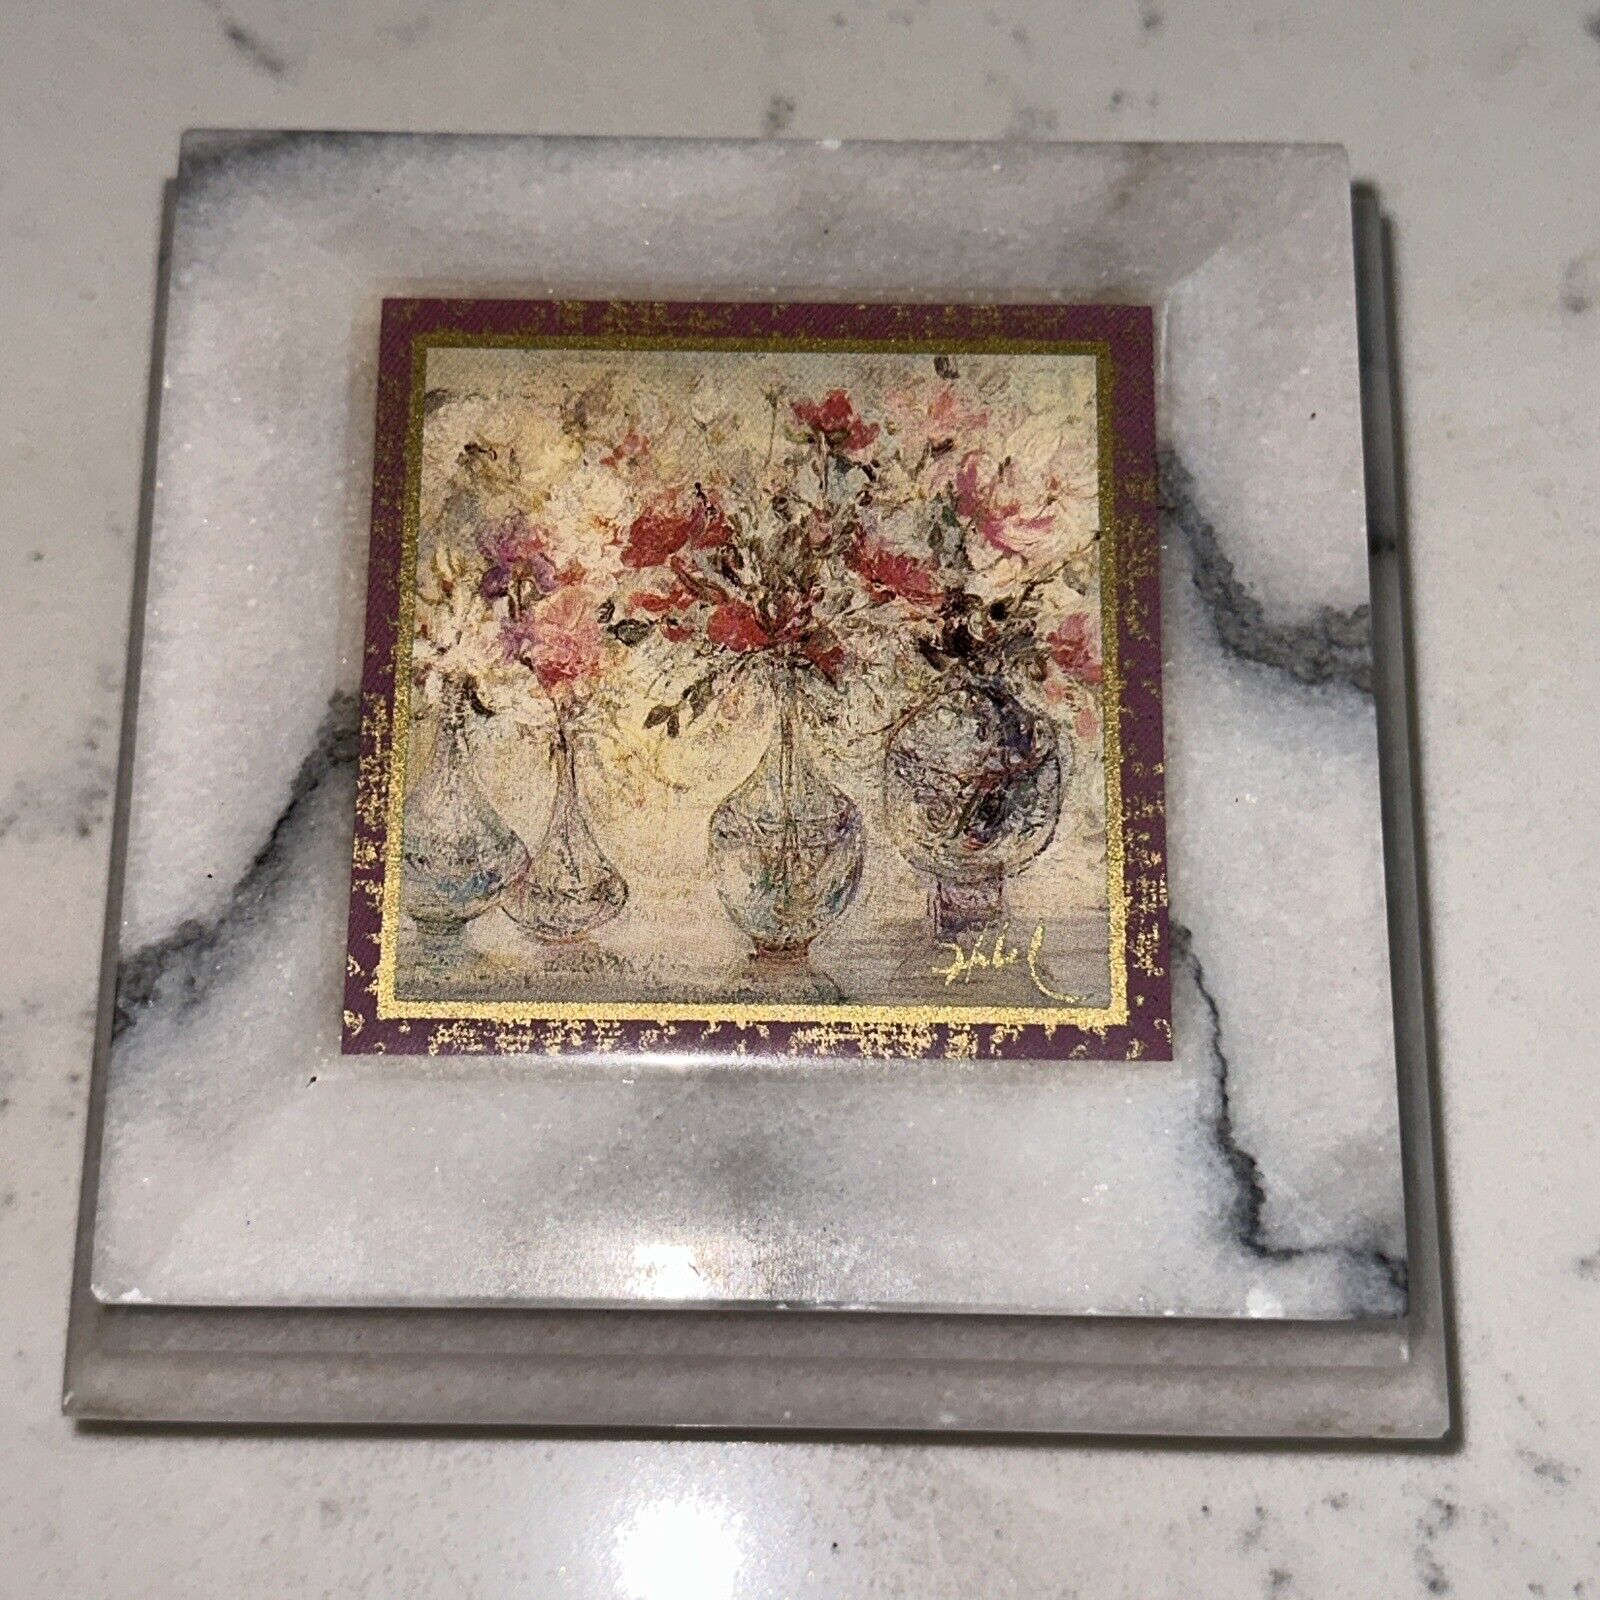 VINTAGE Edna Hibel Art Trinket Box with Lid - White Marble Flowers Scene